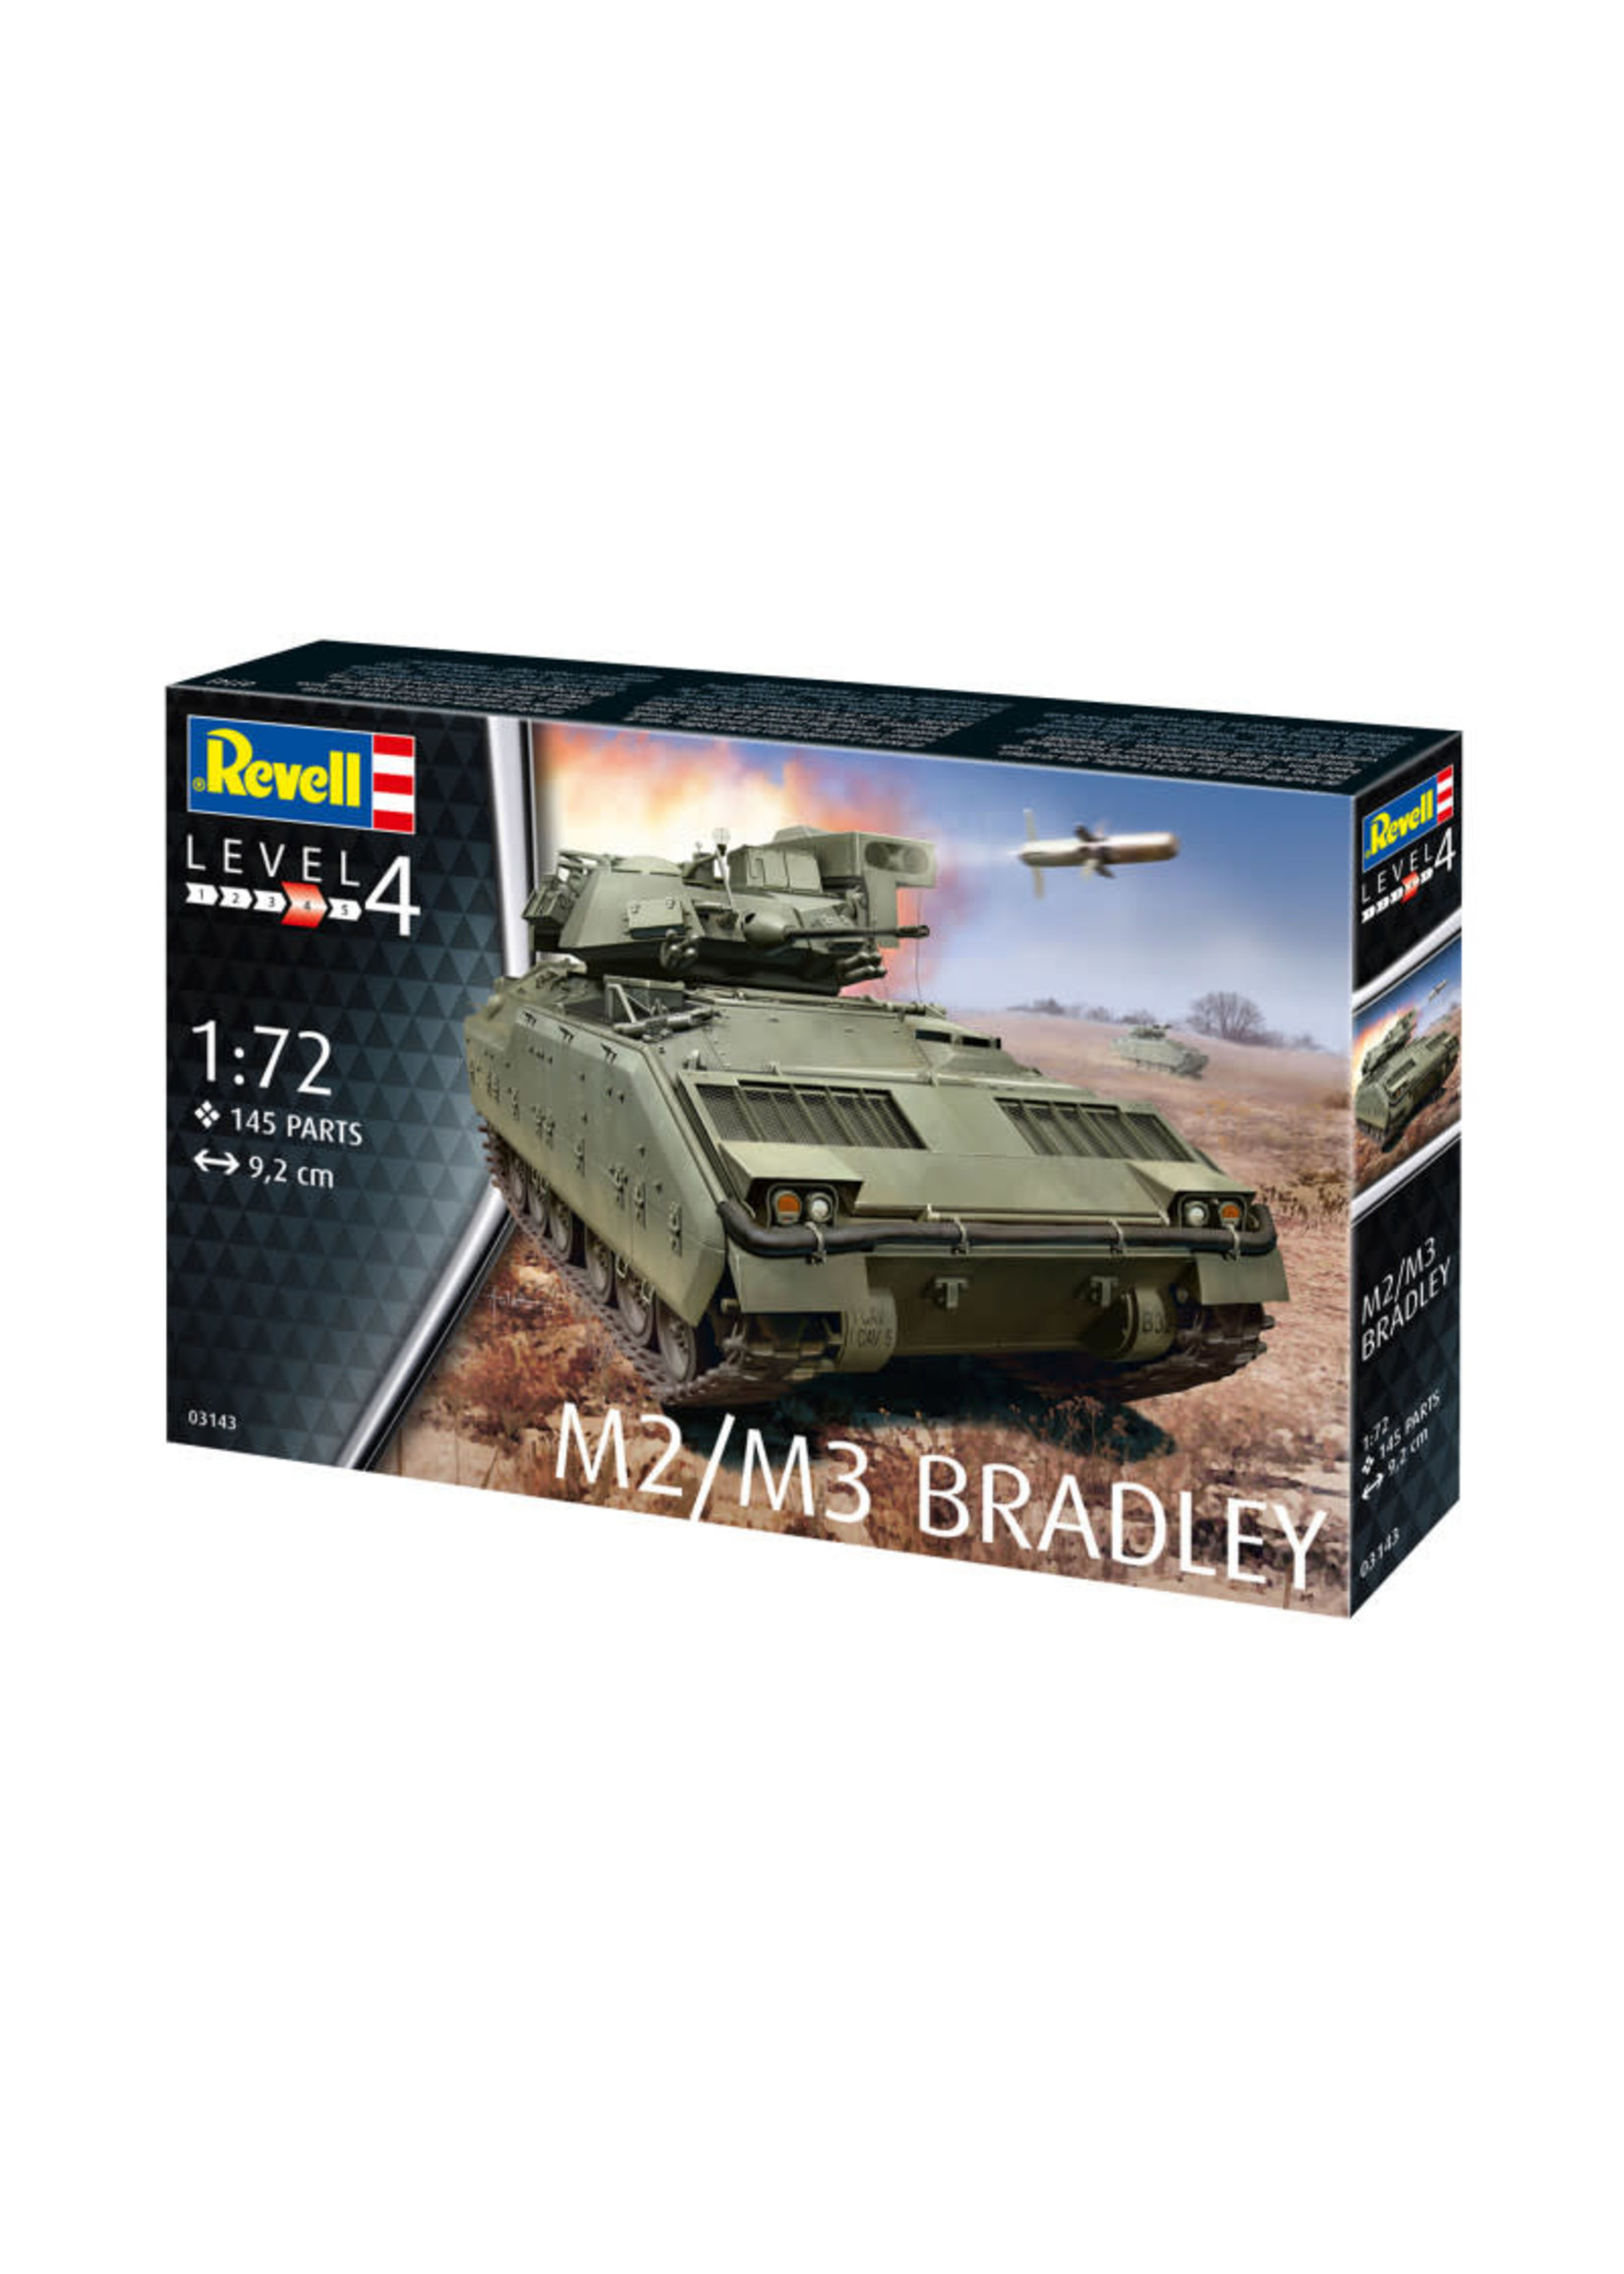 Revell M2/M3 Bradley